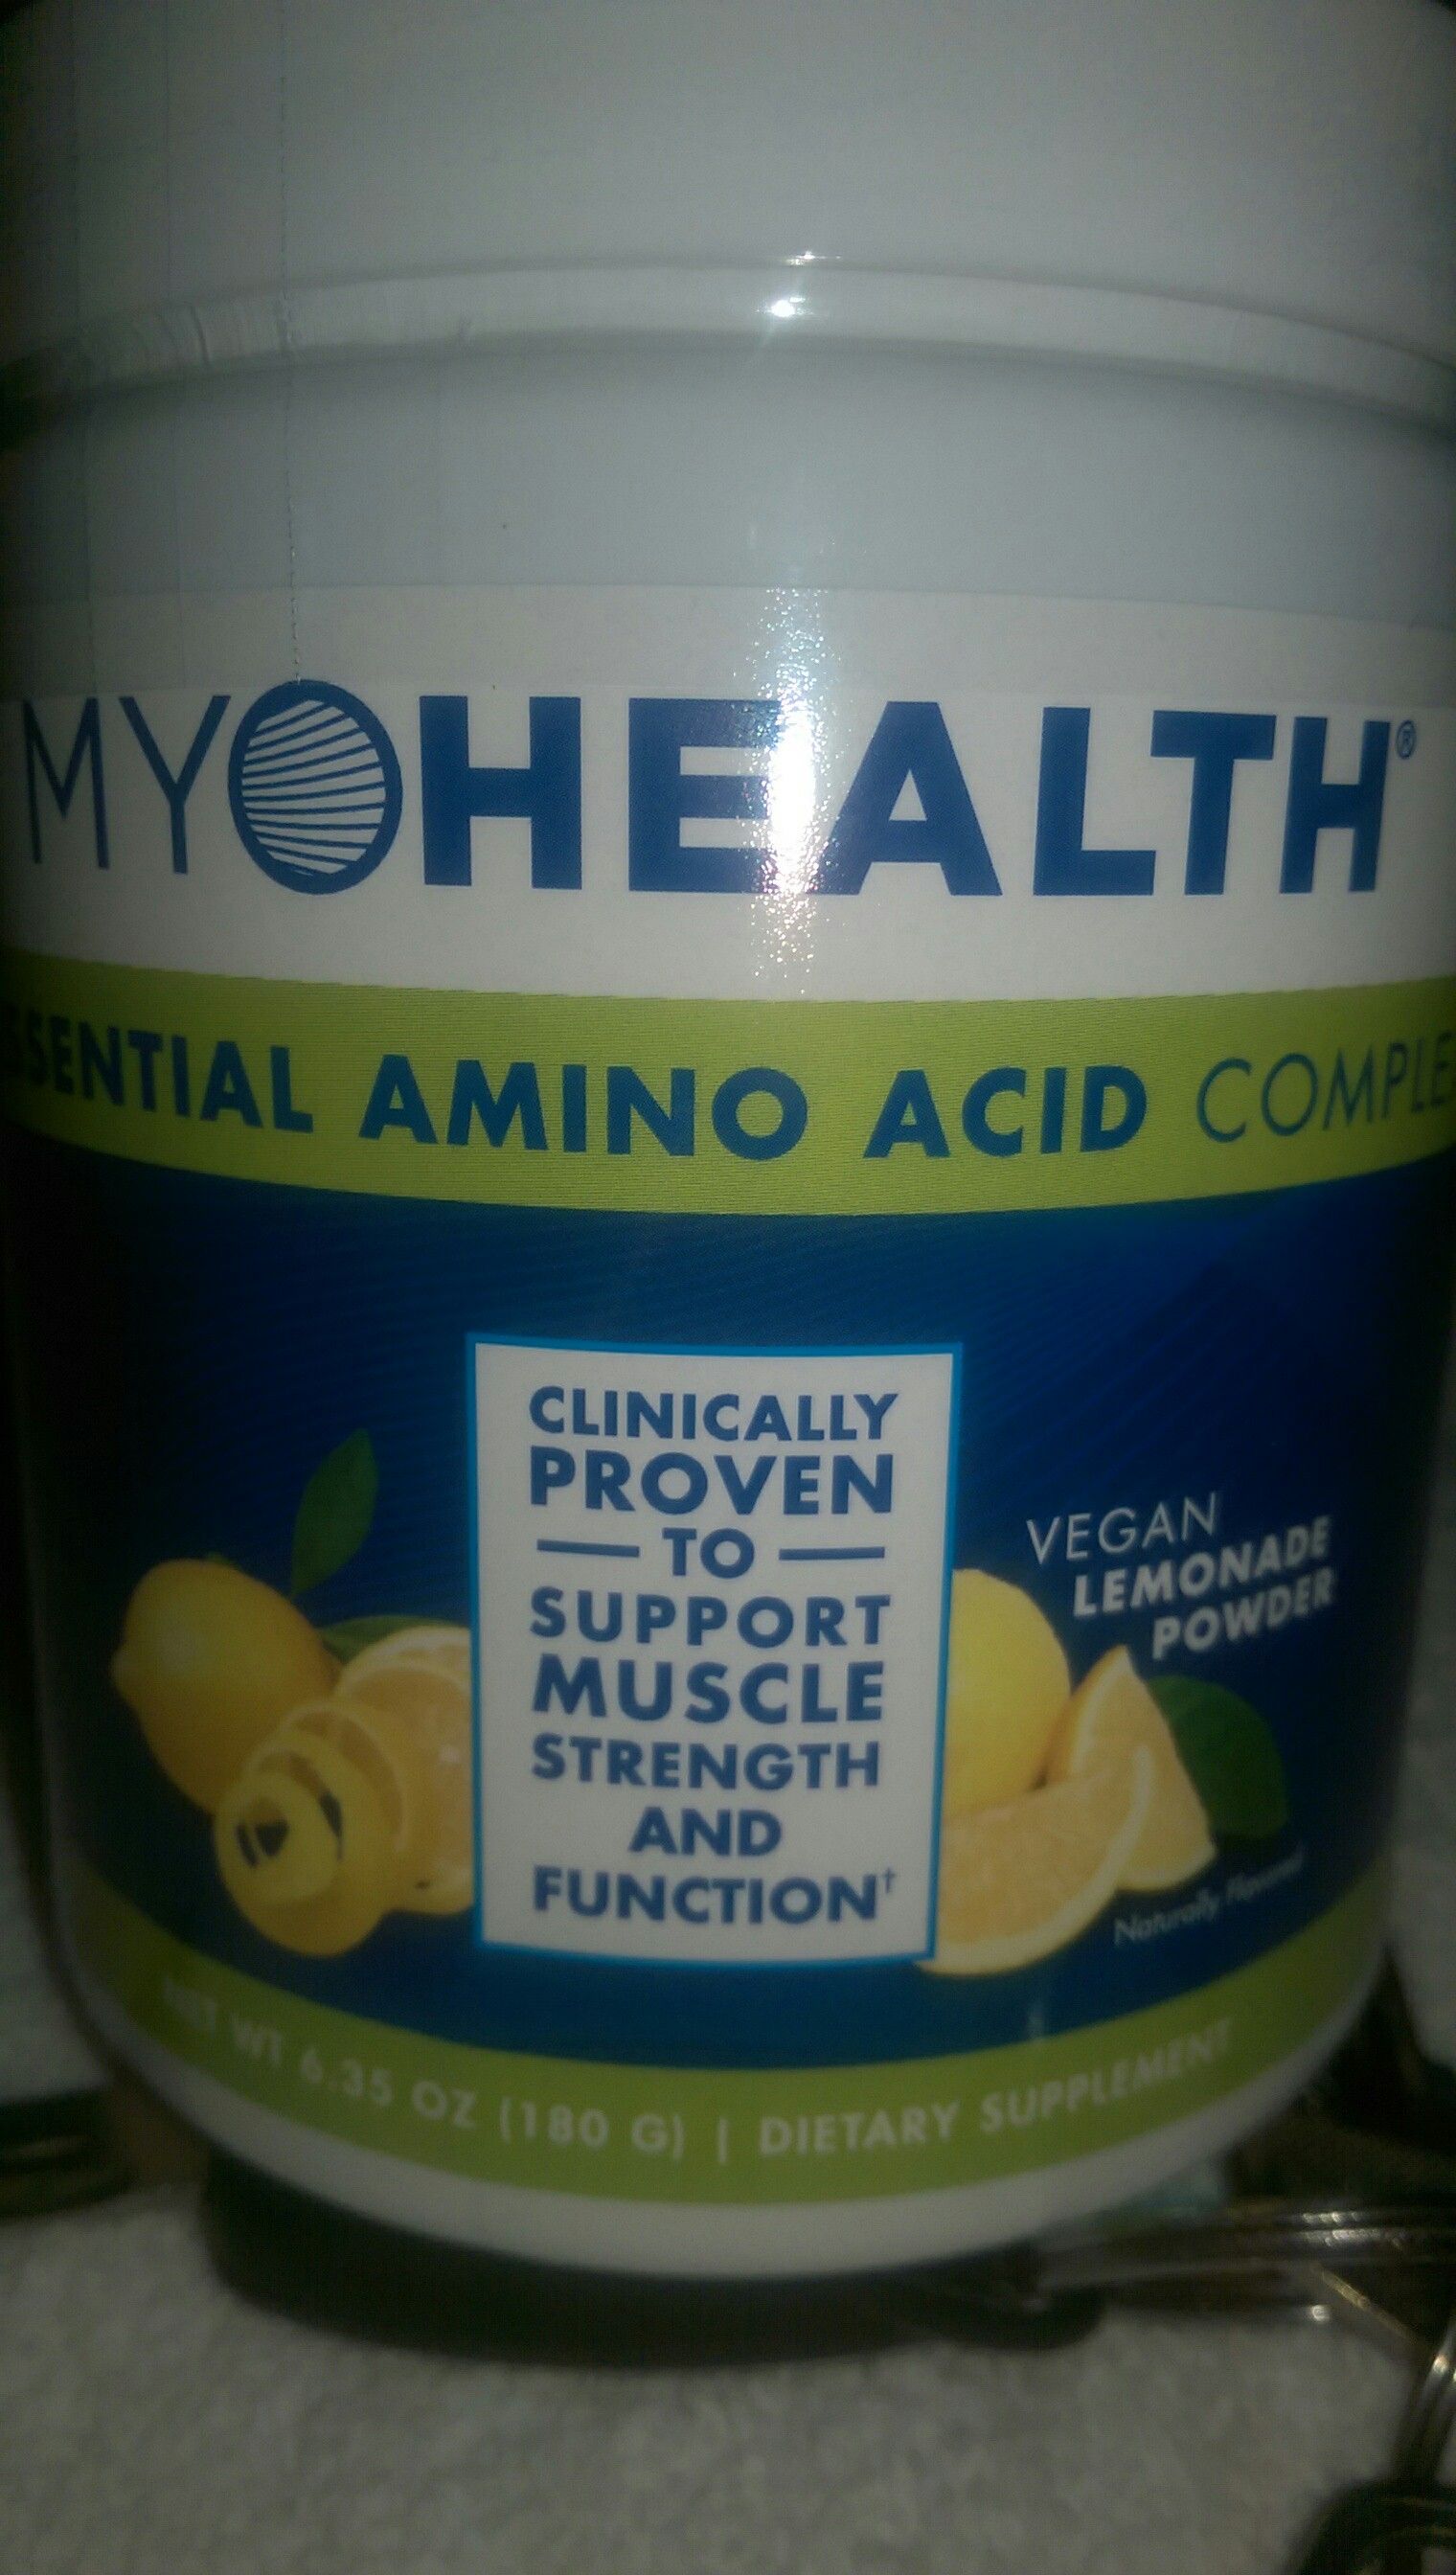 My Health essential amino acid complex